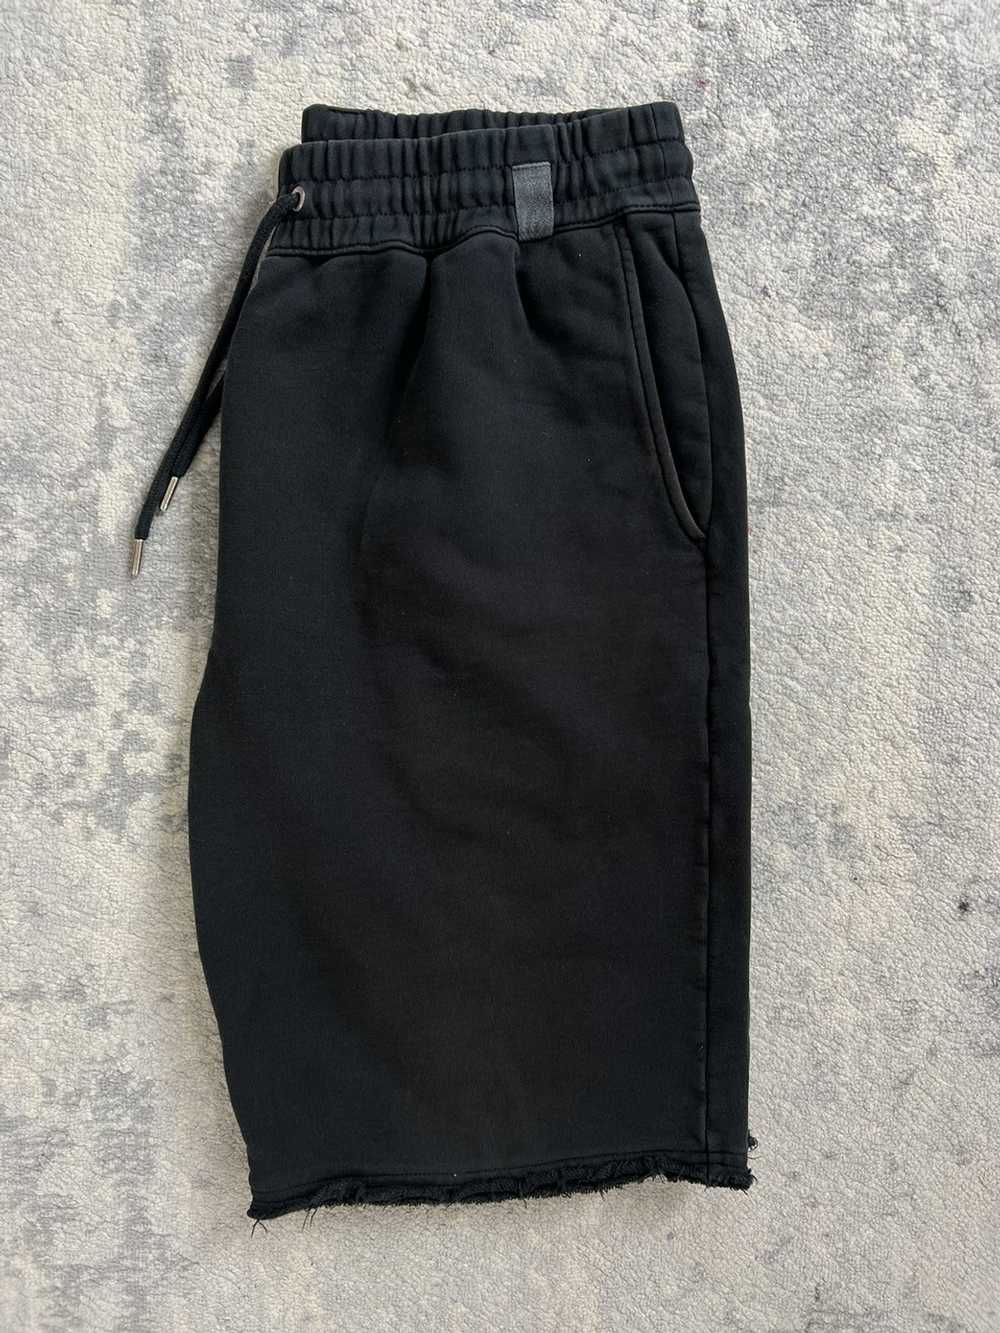 Helmut Lang Helmut Lang Jersey Cotton Shorts - image 3